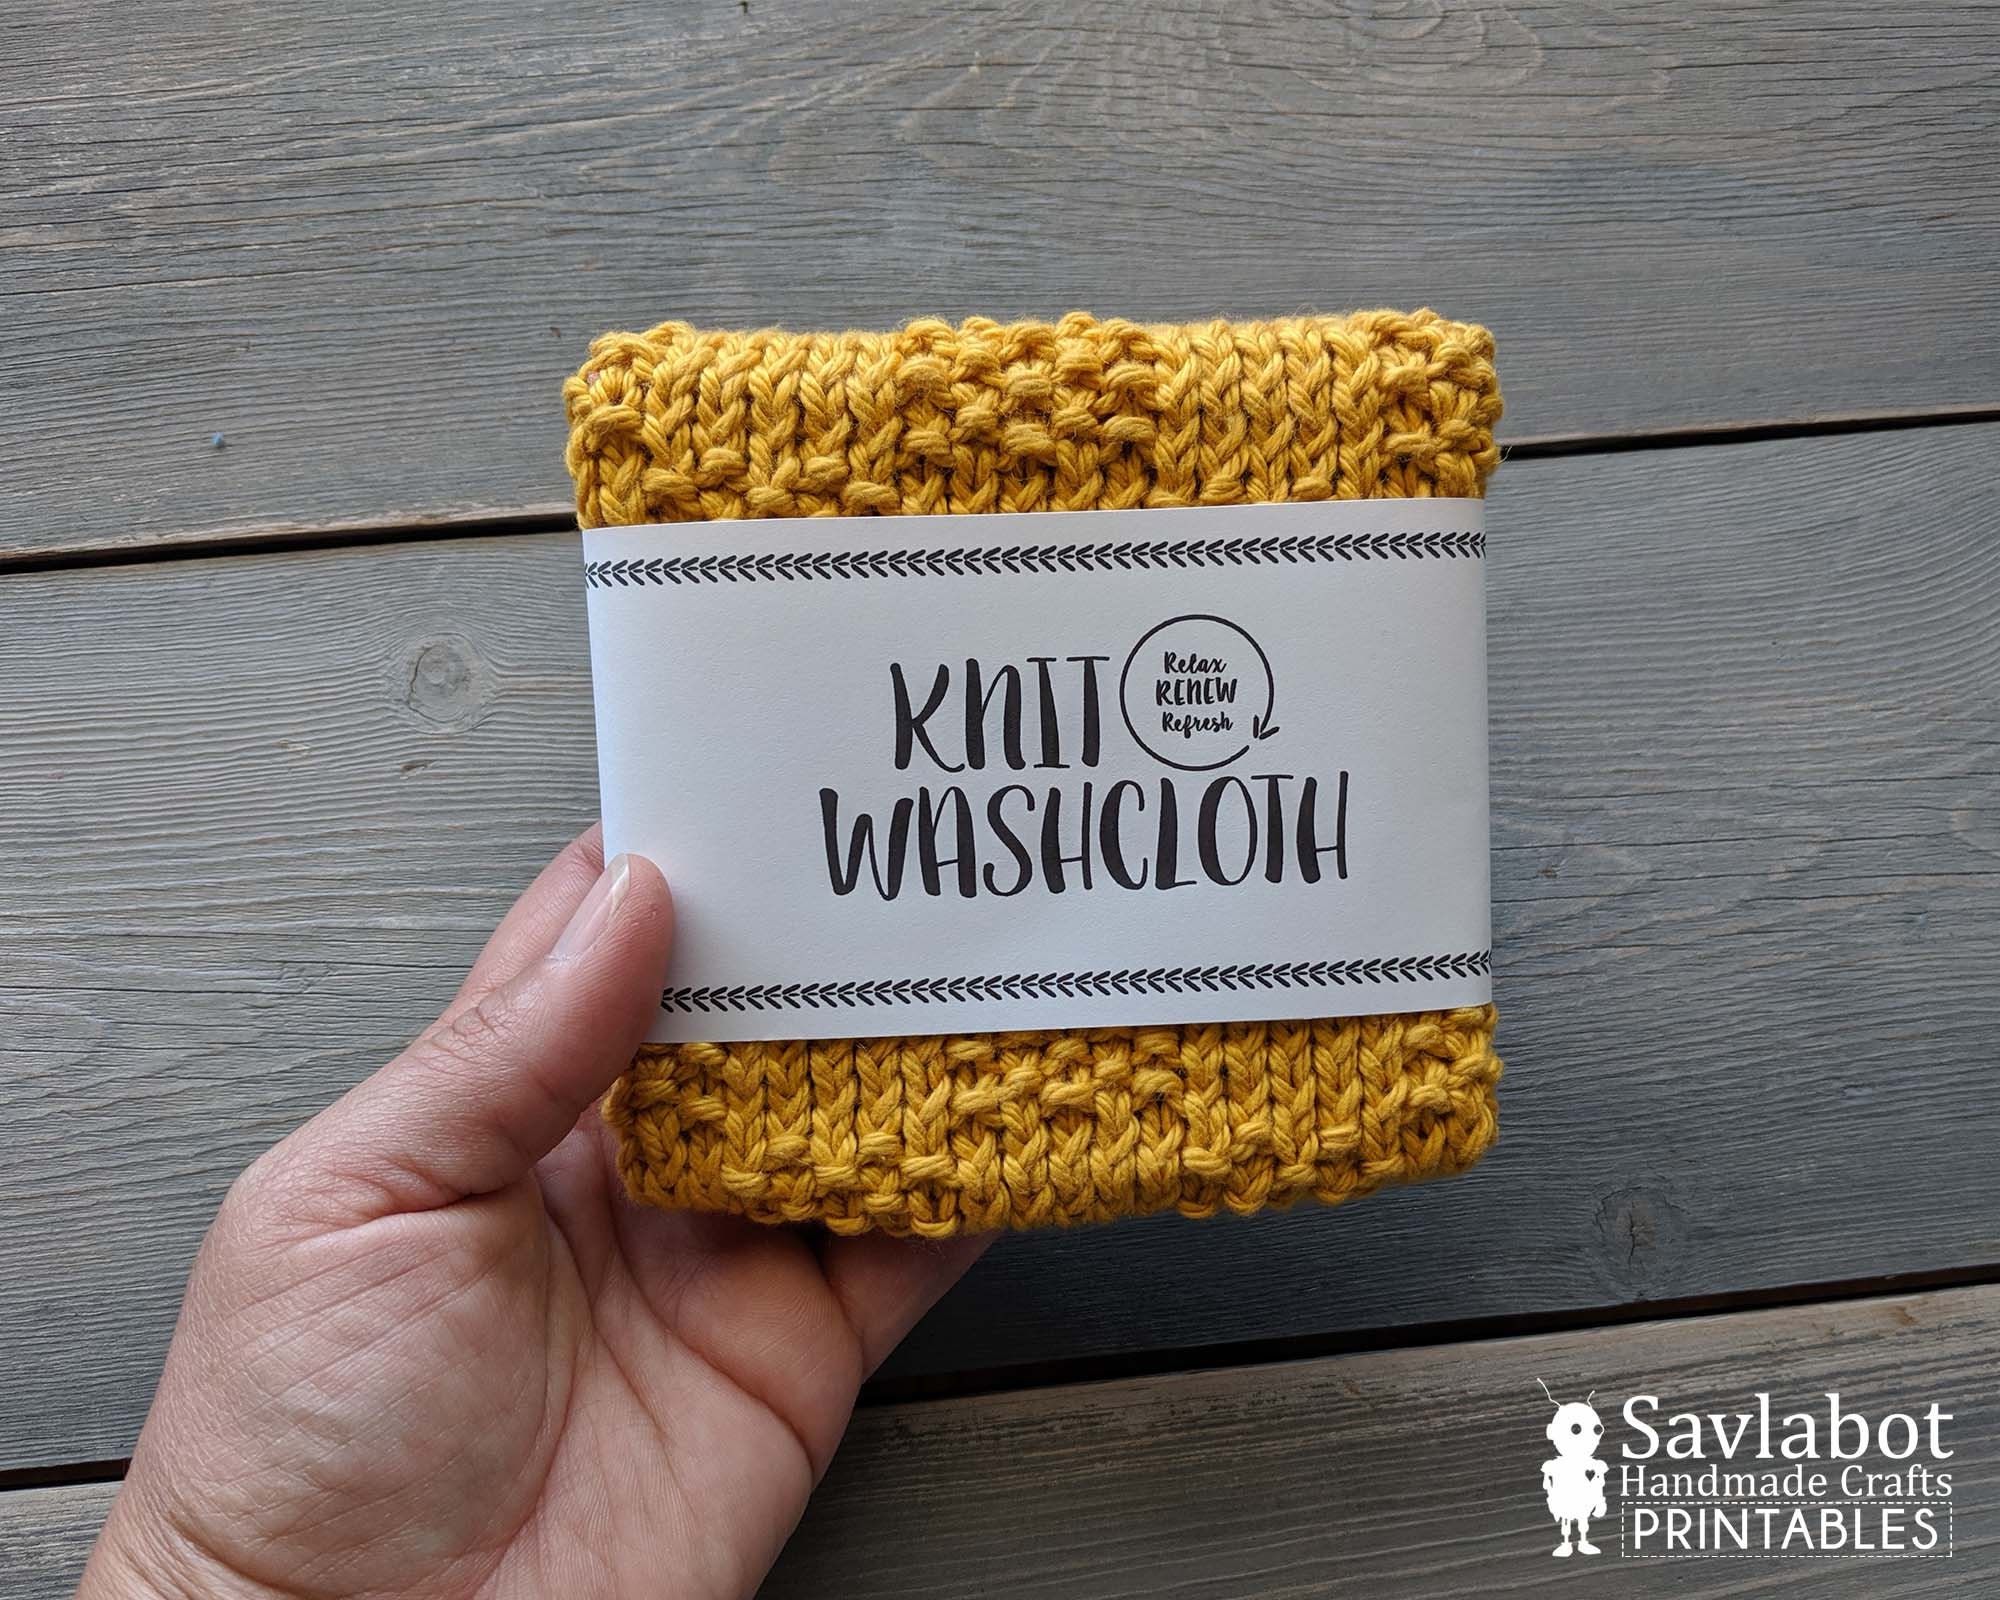 Custom Knitting & Crochet Tags Labels, Washcloth Wrap, Printable